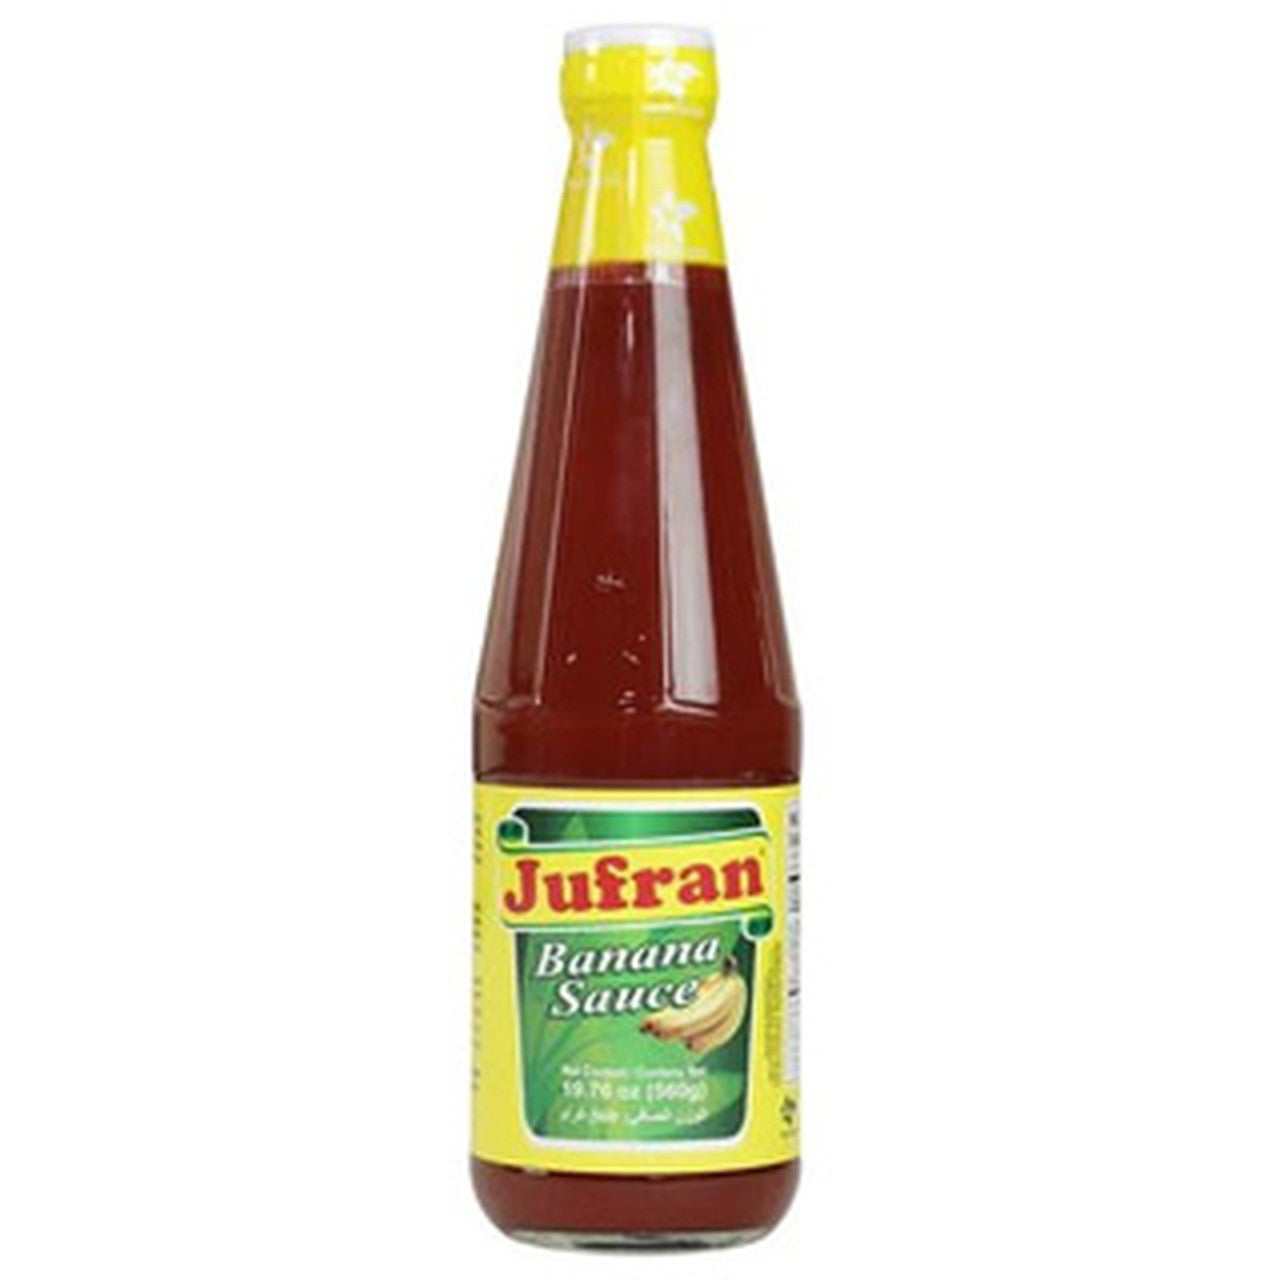 Jufran Banana Sauce Mild 560g/19.76 oz. Tomato-Less Ketchup {Imported from Canada}